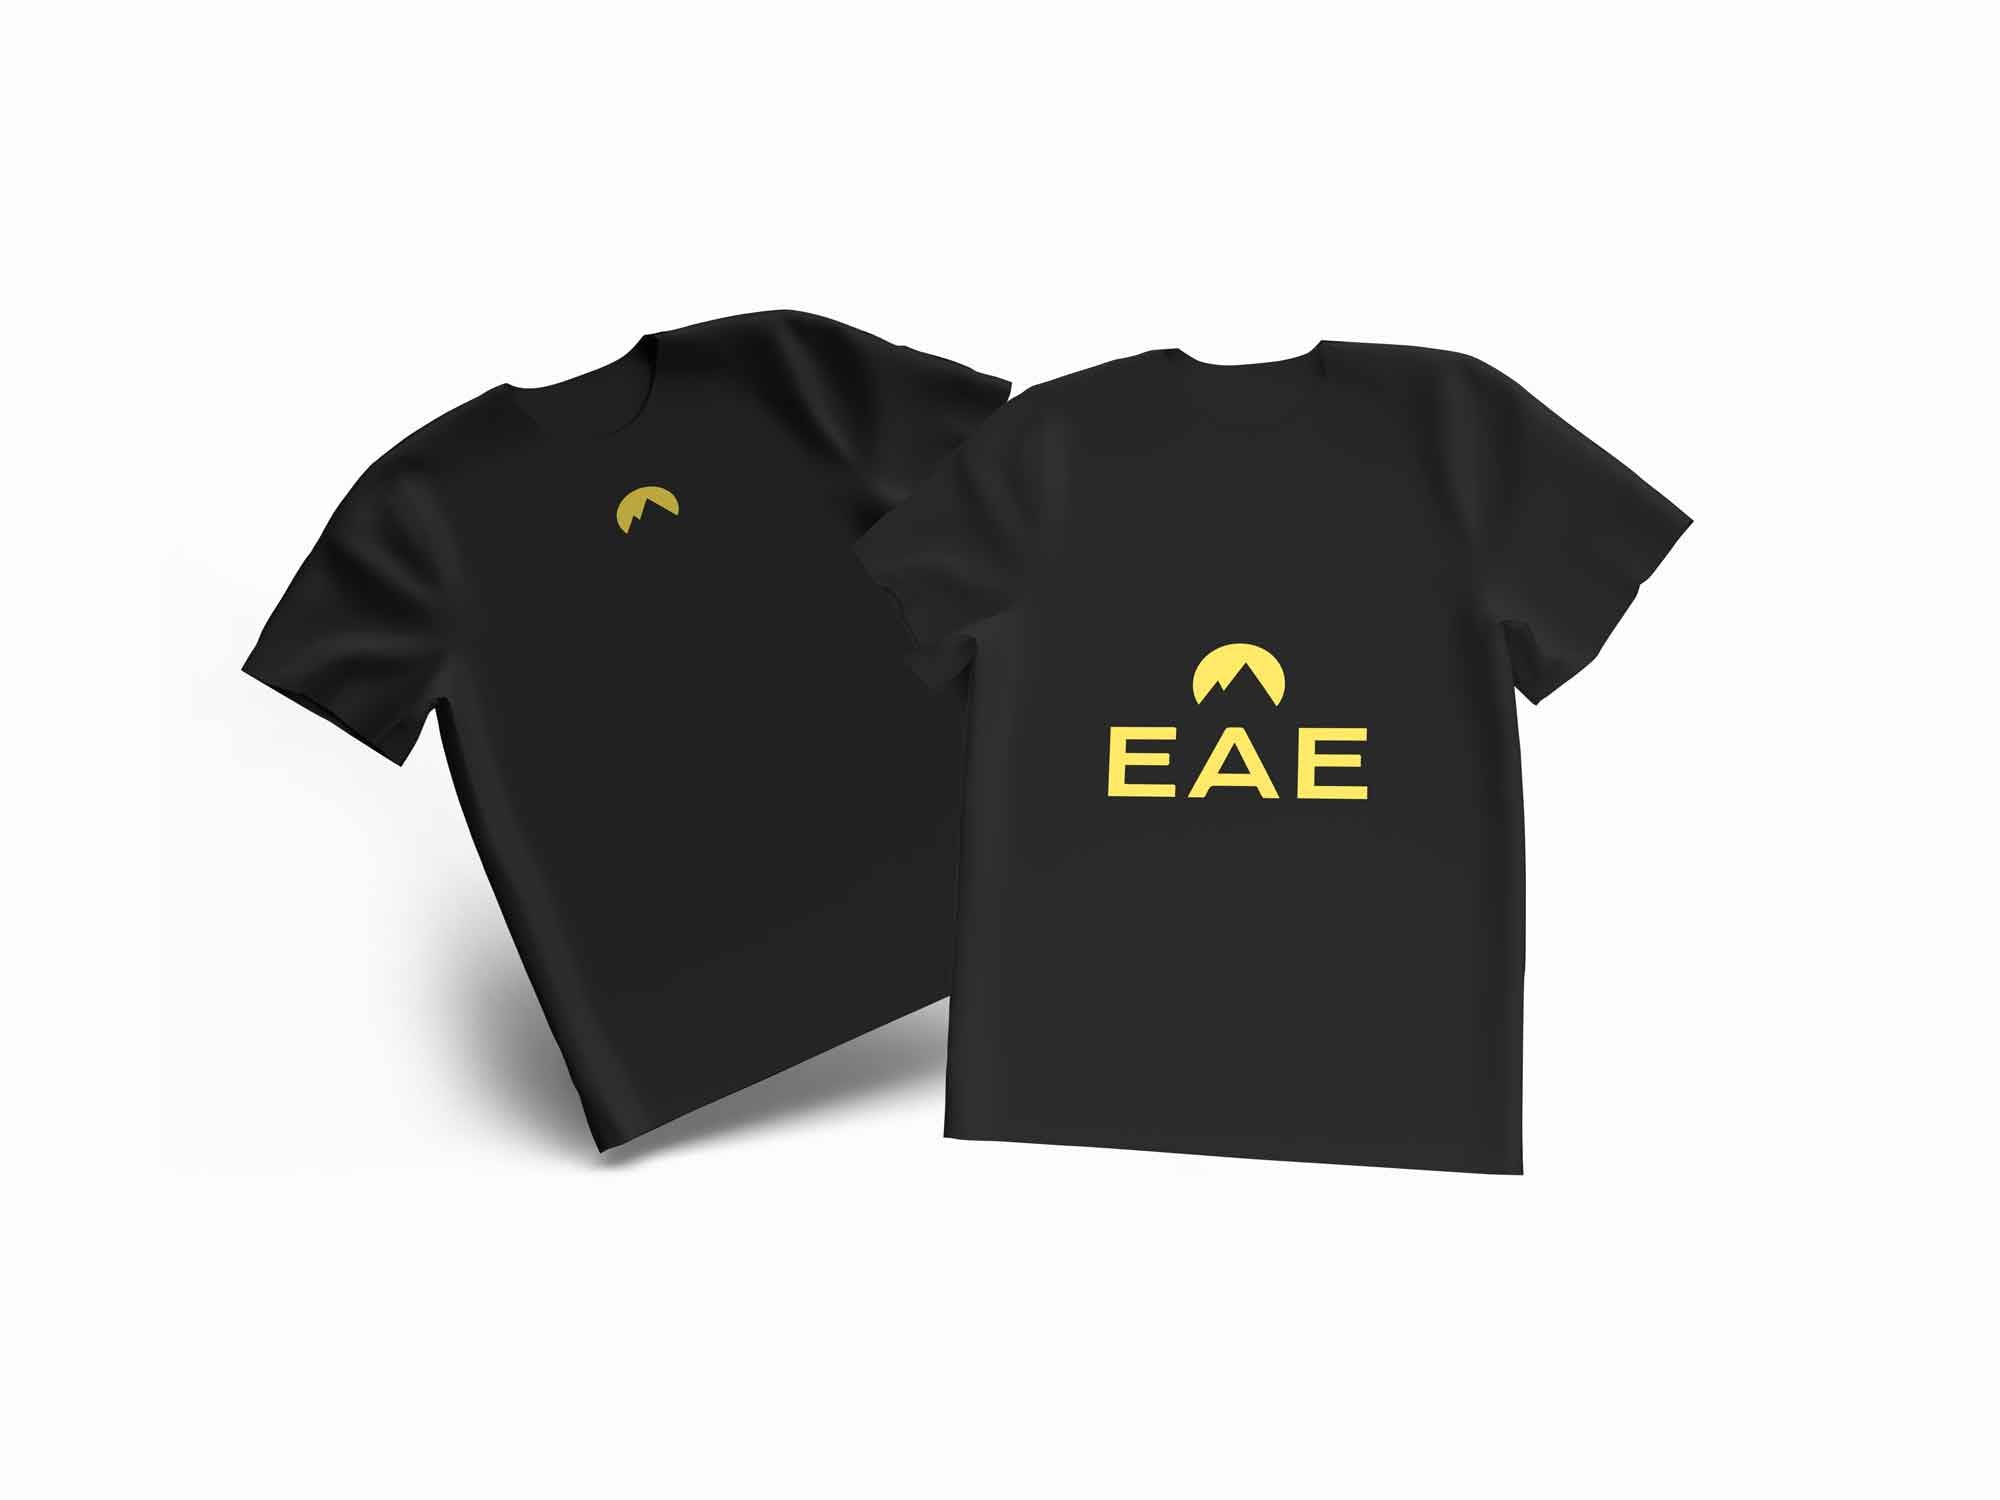 collections/eae-motivation-black-t-shirt-yellow-logo.jpg